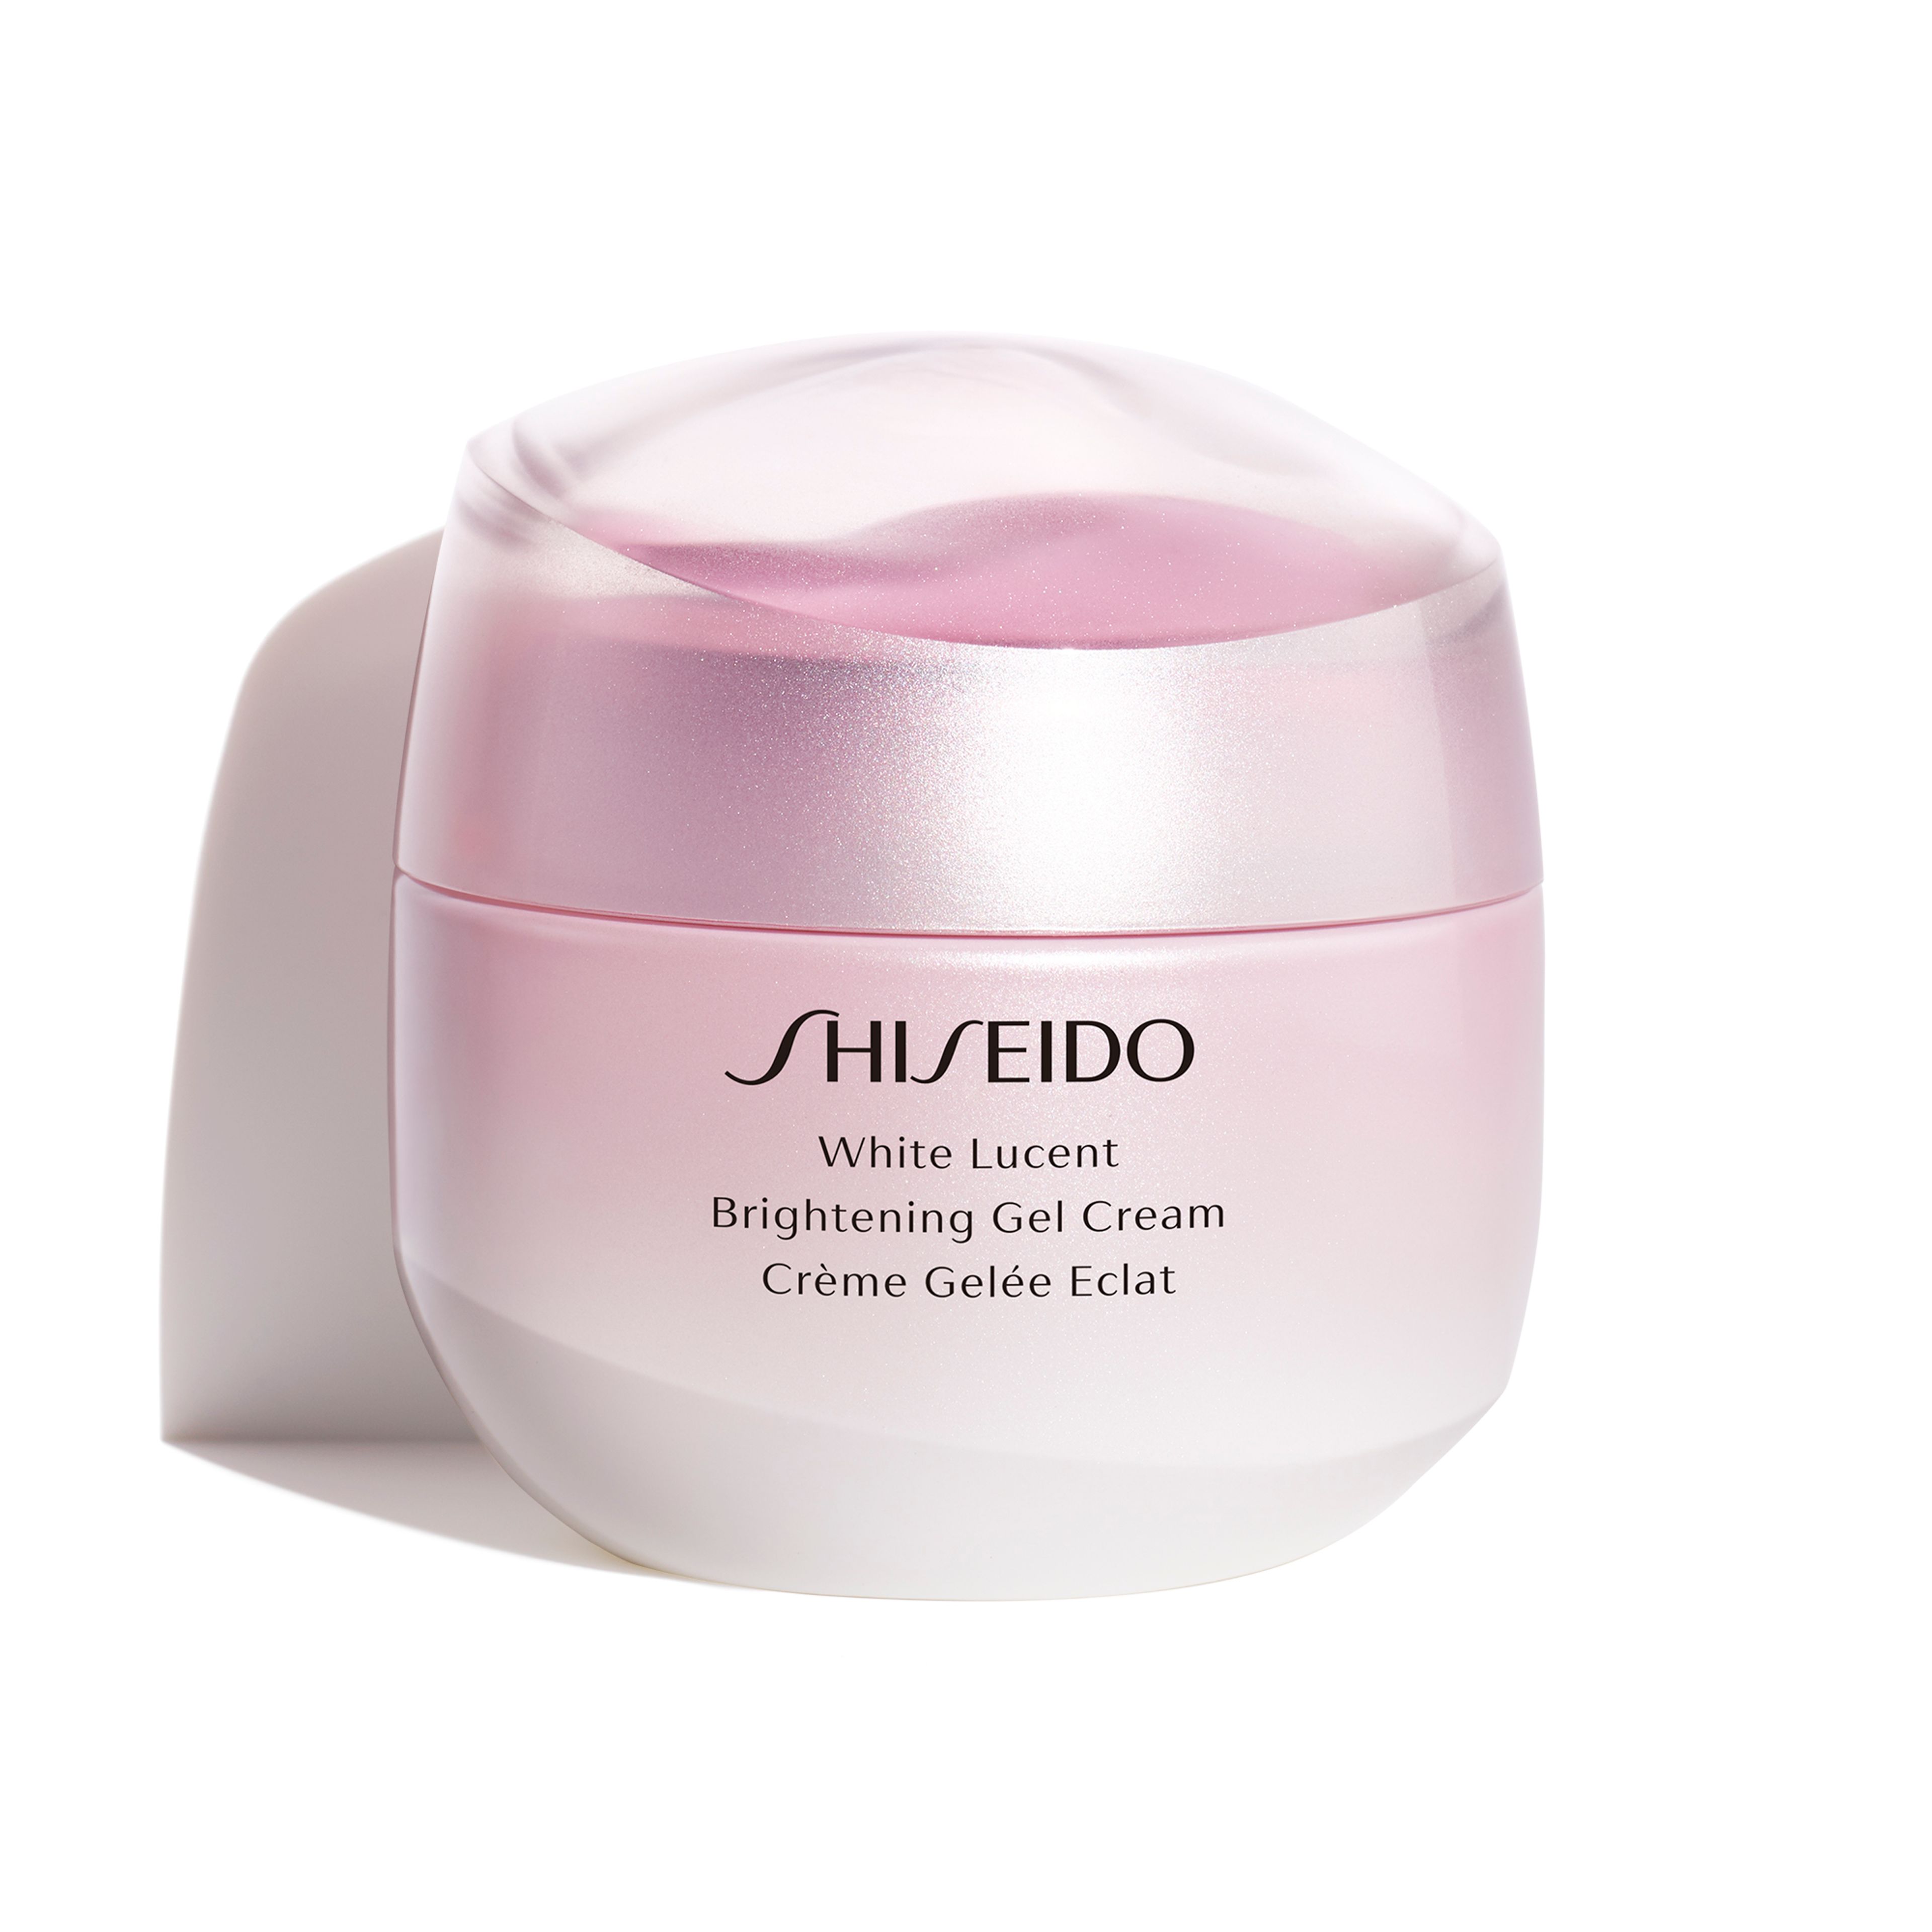 Shiseido Brightening Gel Cream 1